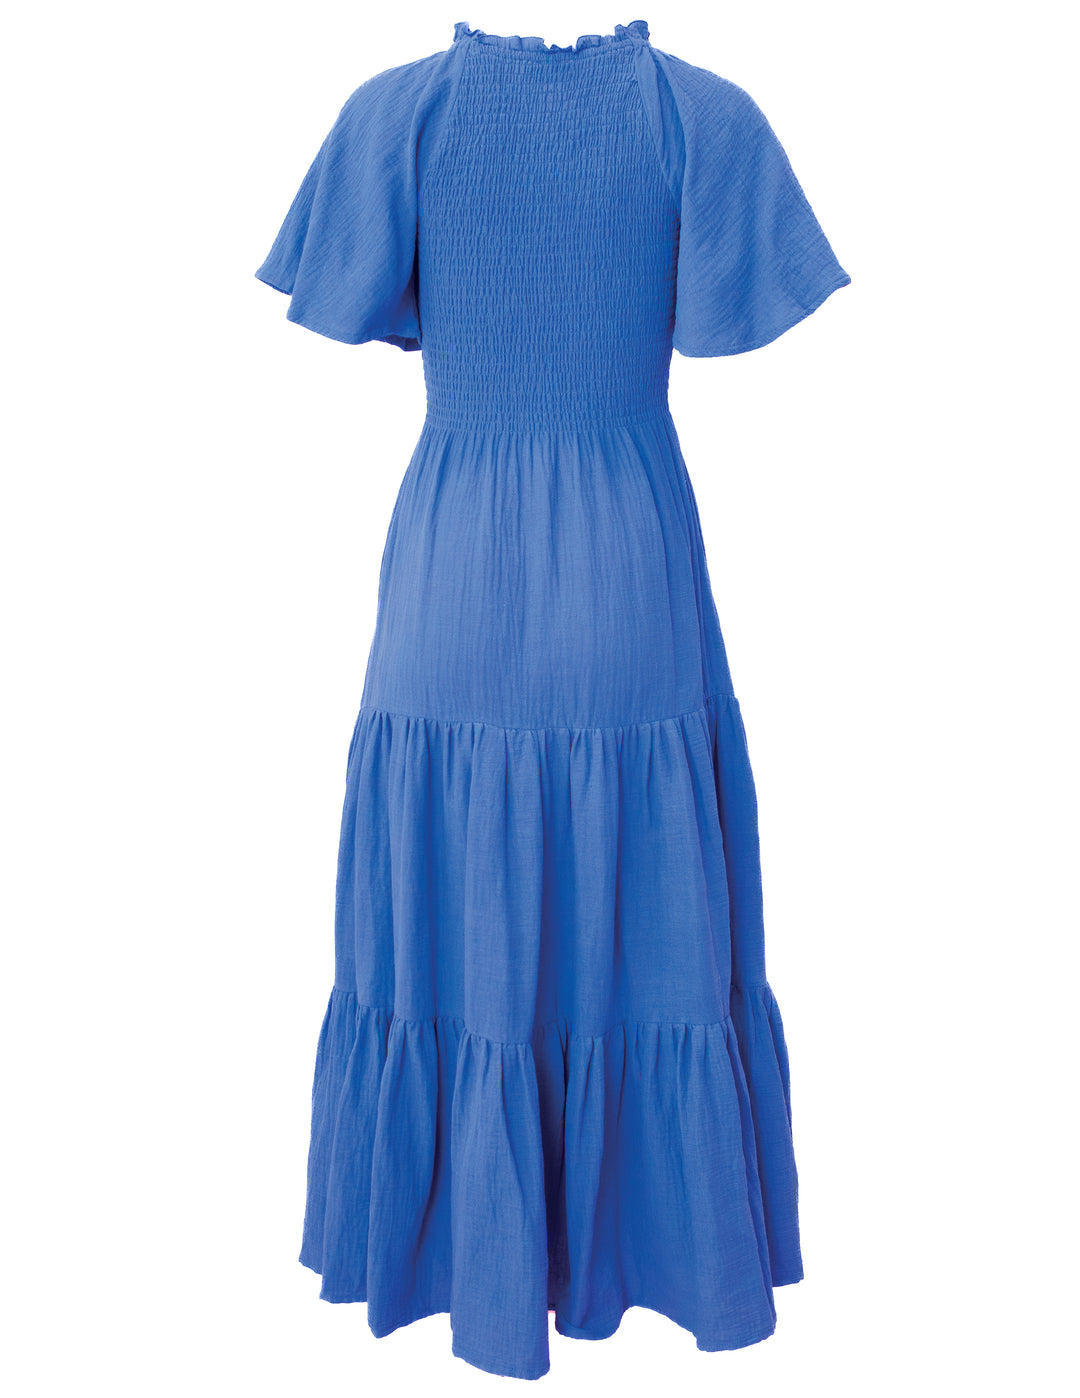 Jovie Dress in Royal Blue